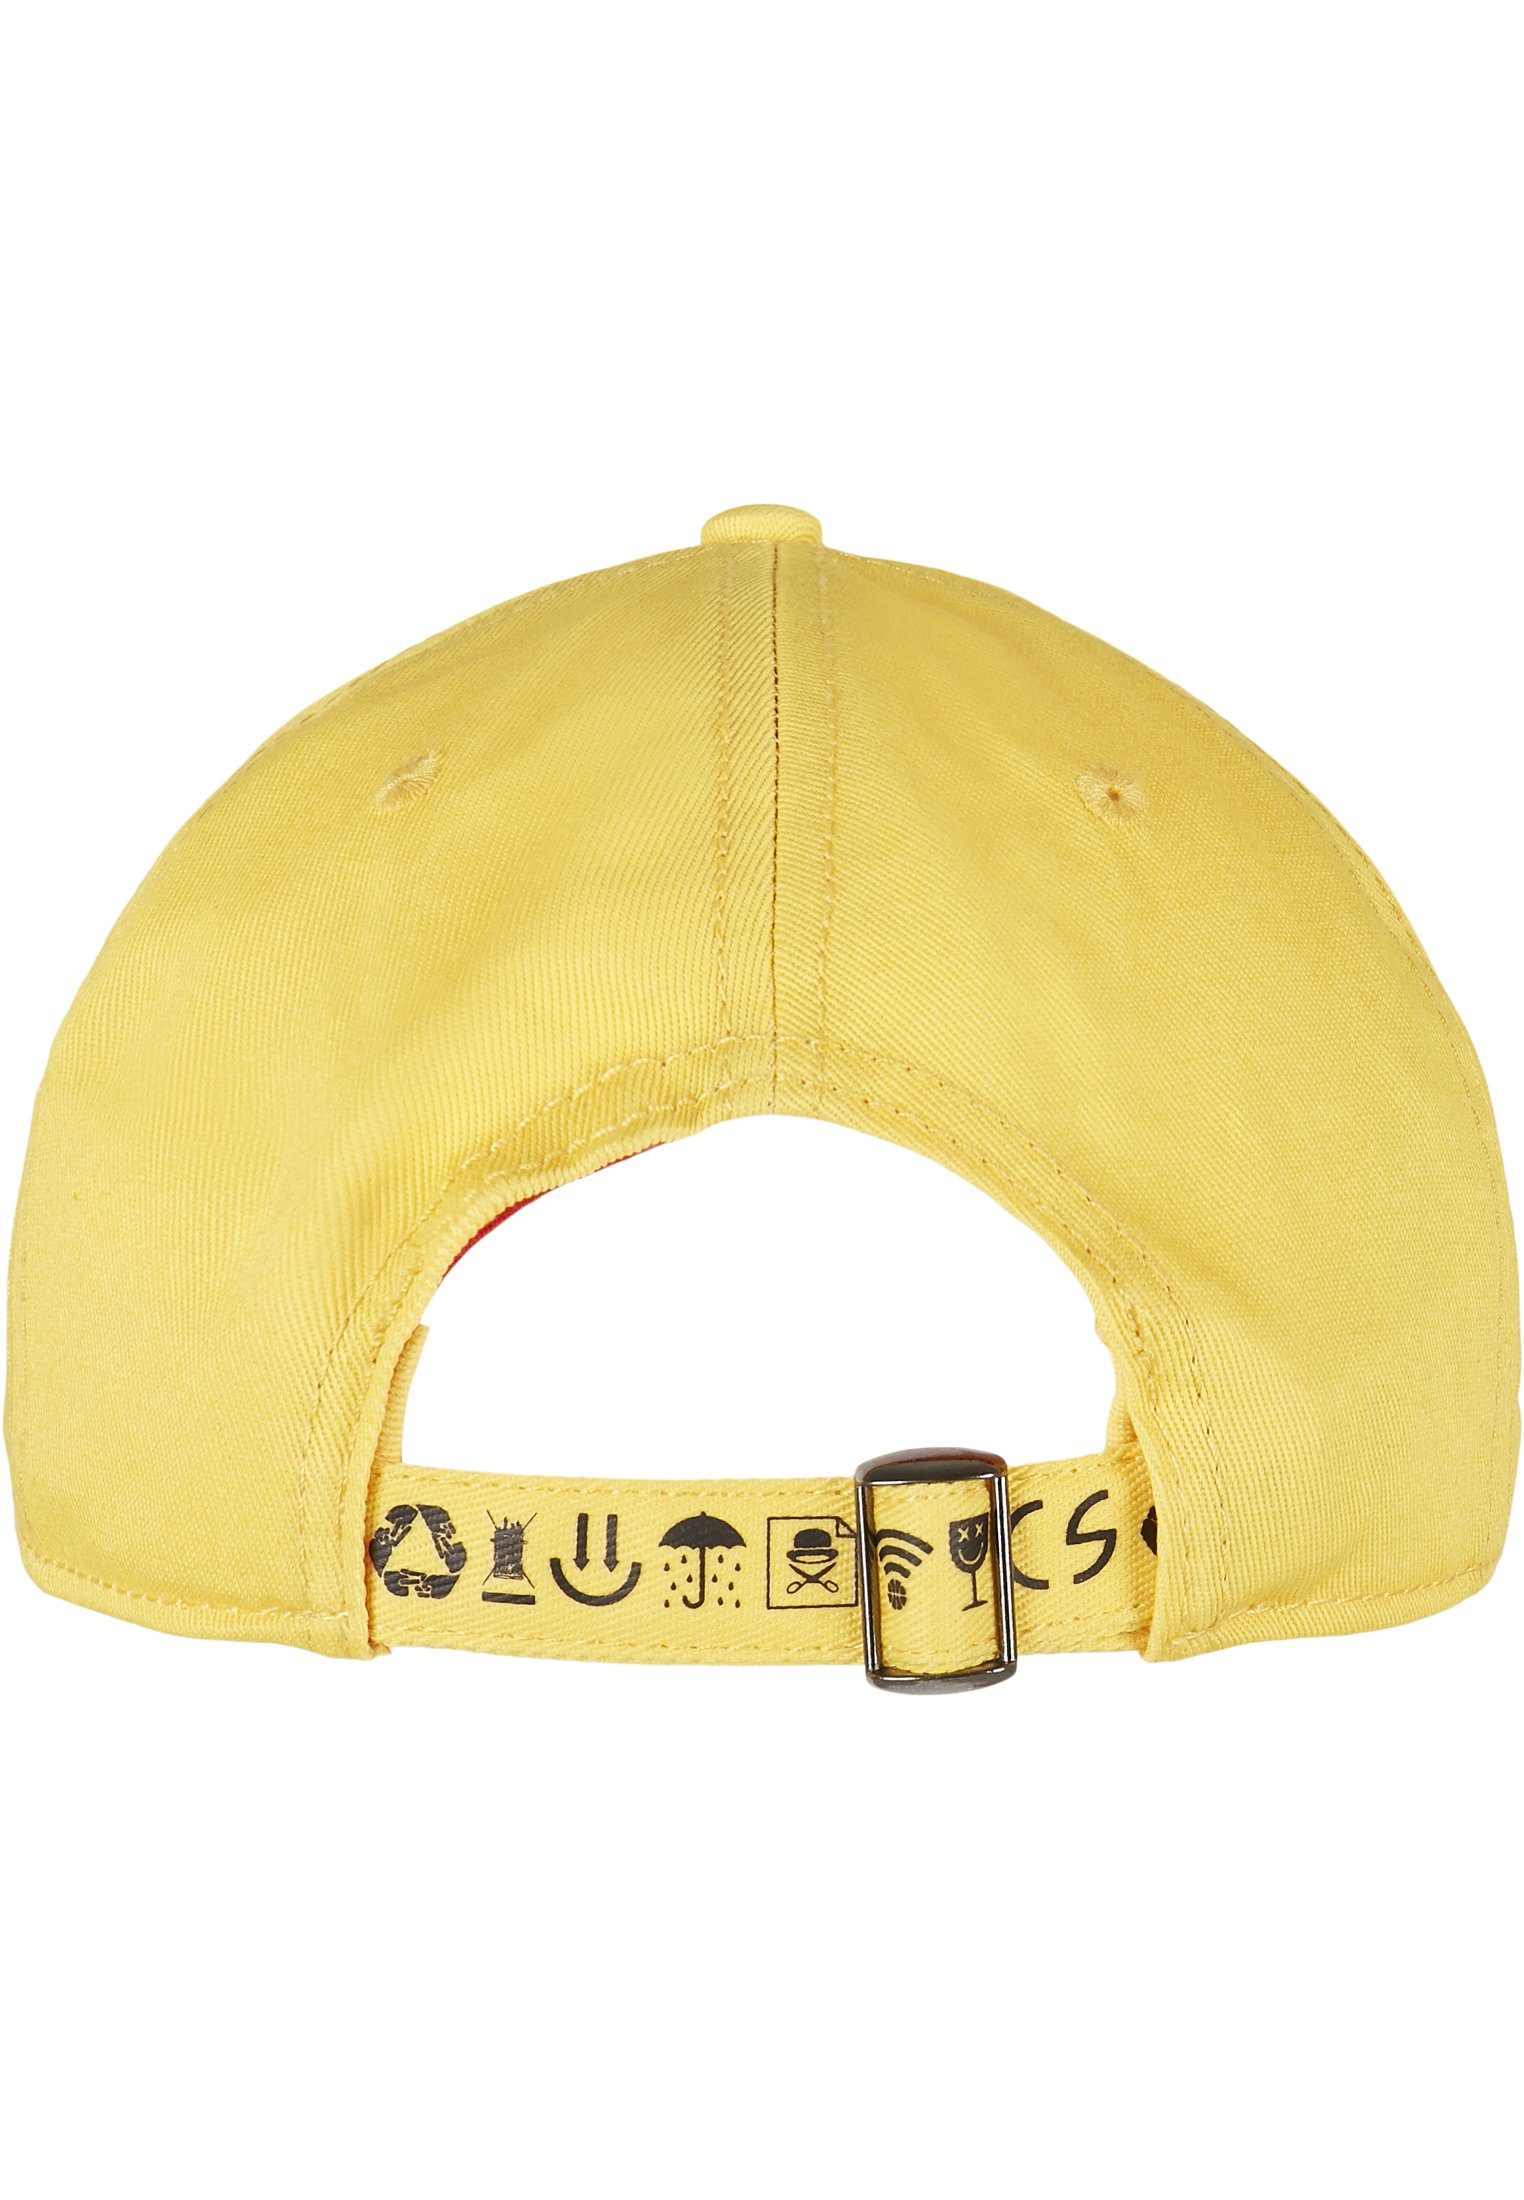 SONS & Flex Cap CAYLER Curved Iconic Cap C&S Peace yellow/multicolor